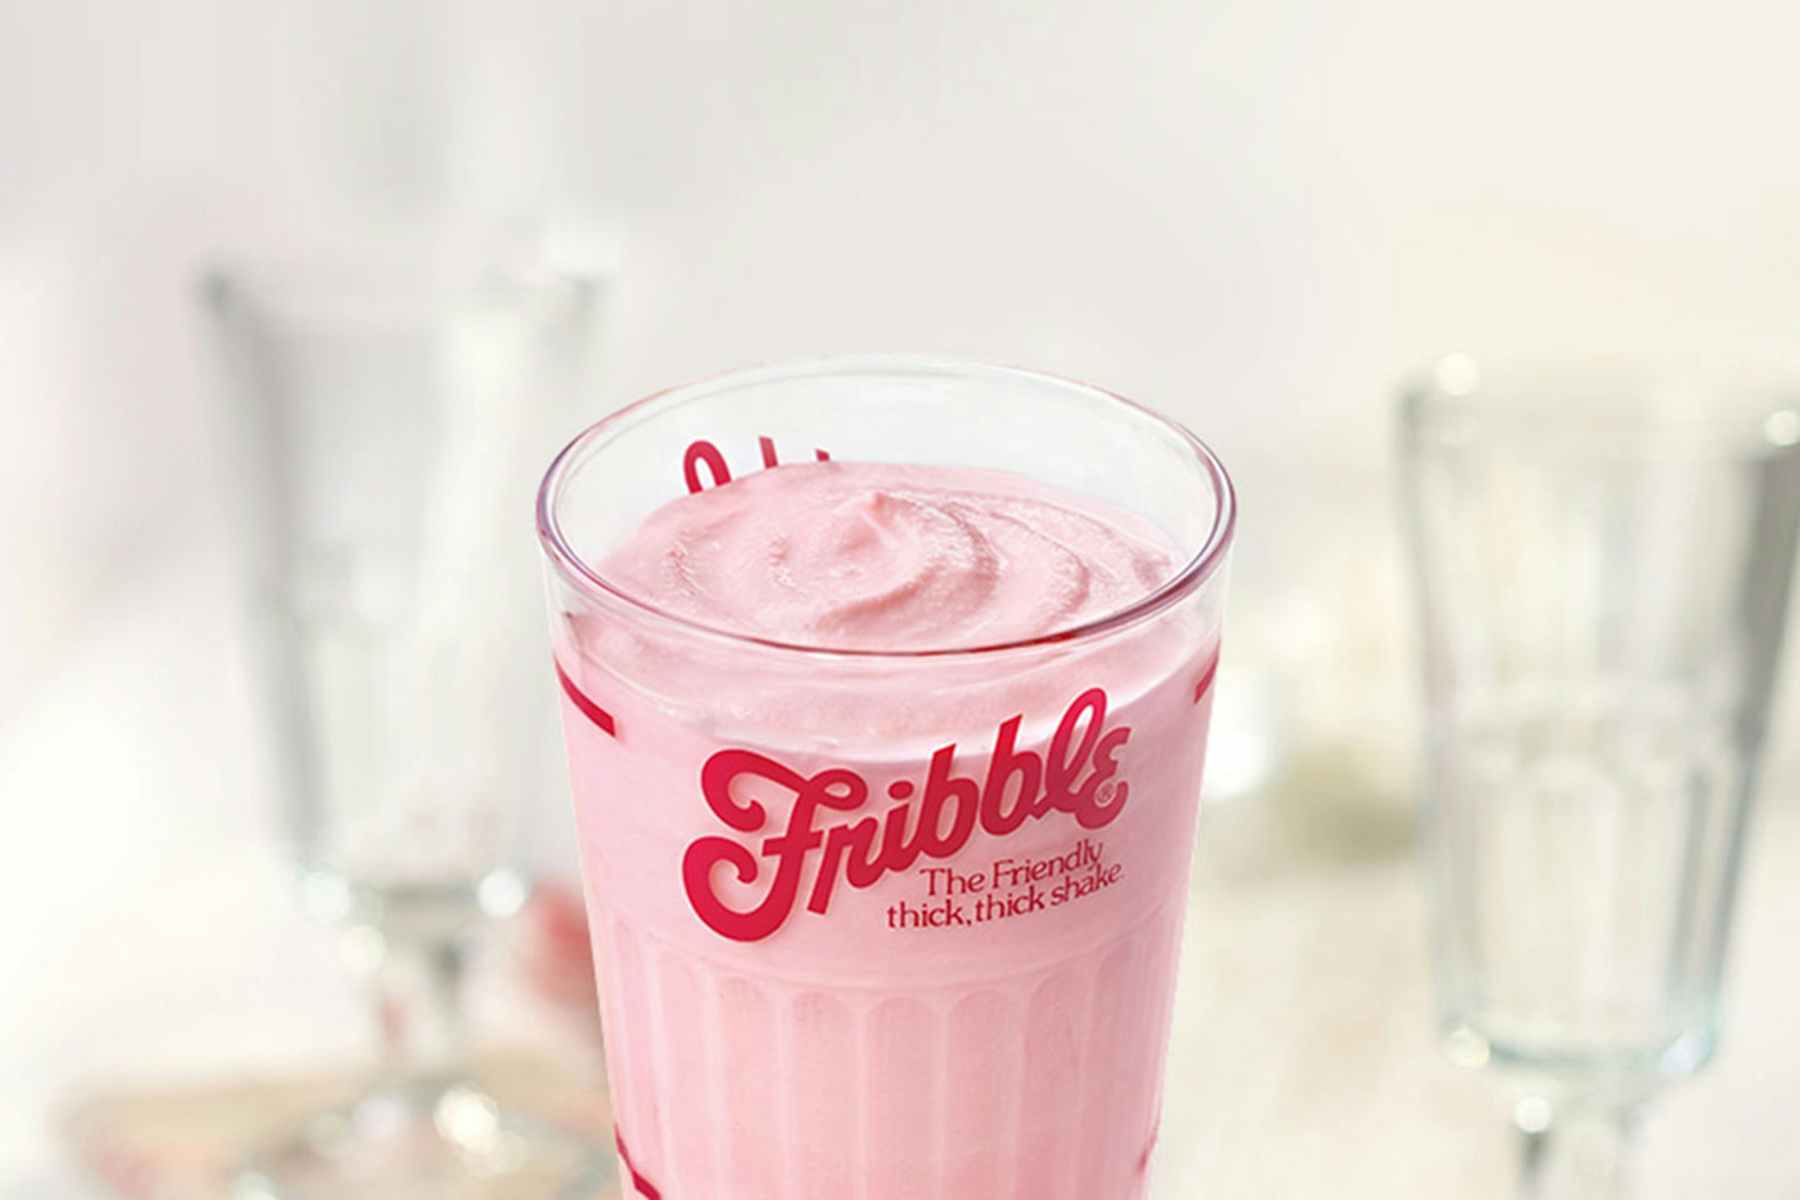 friendlys fribble ice cream shake 